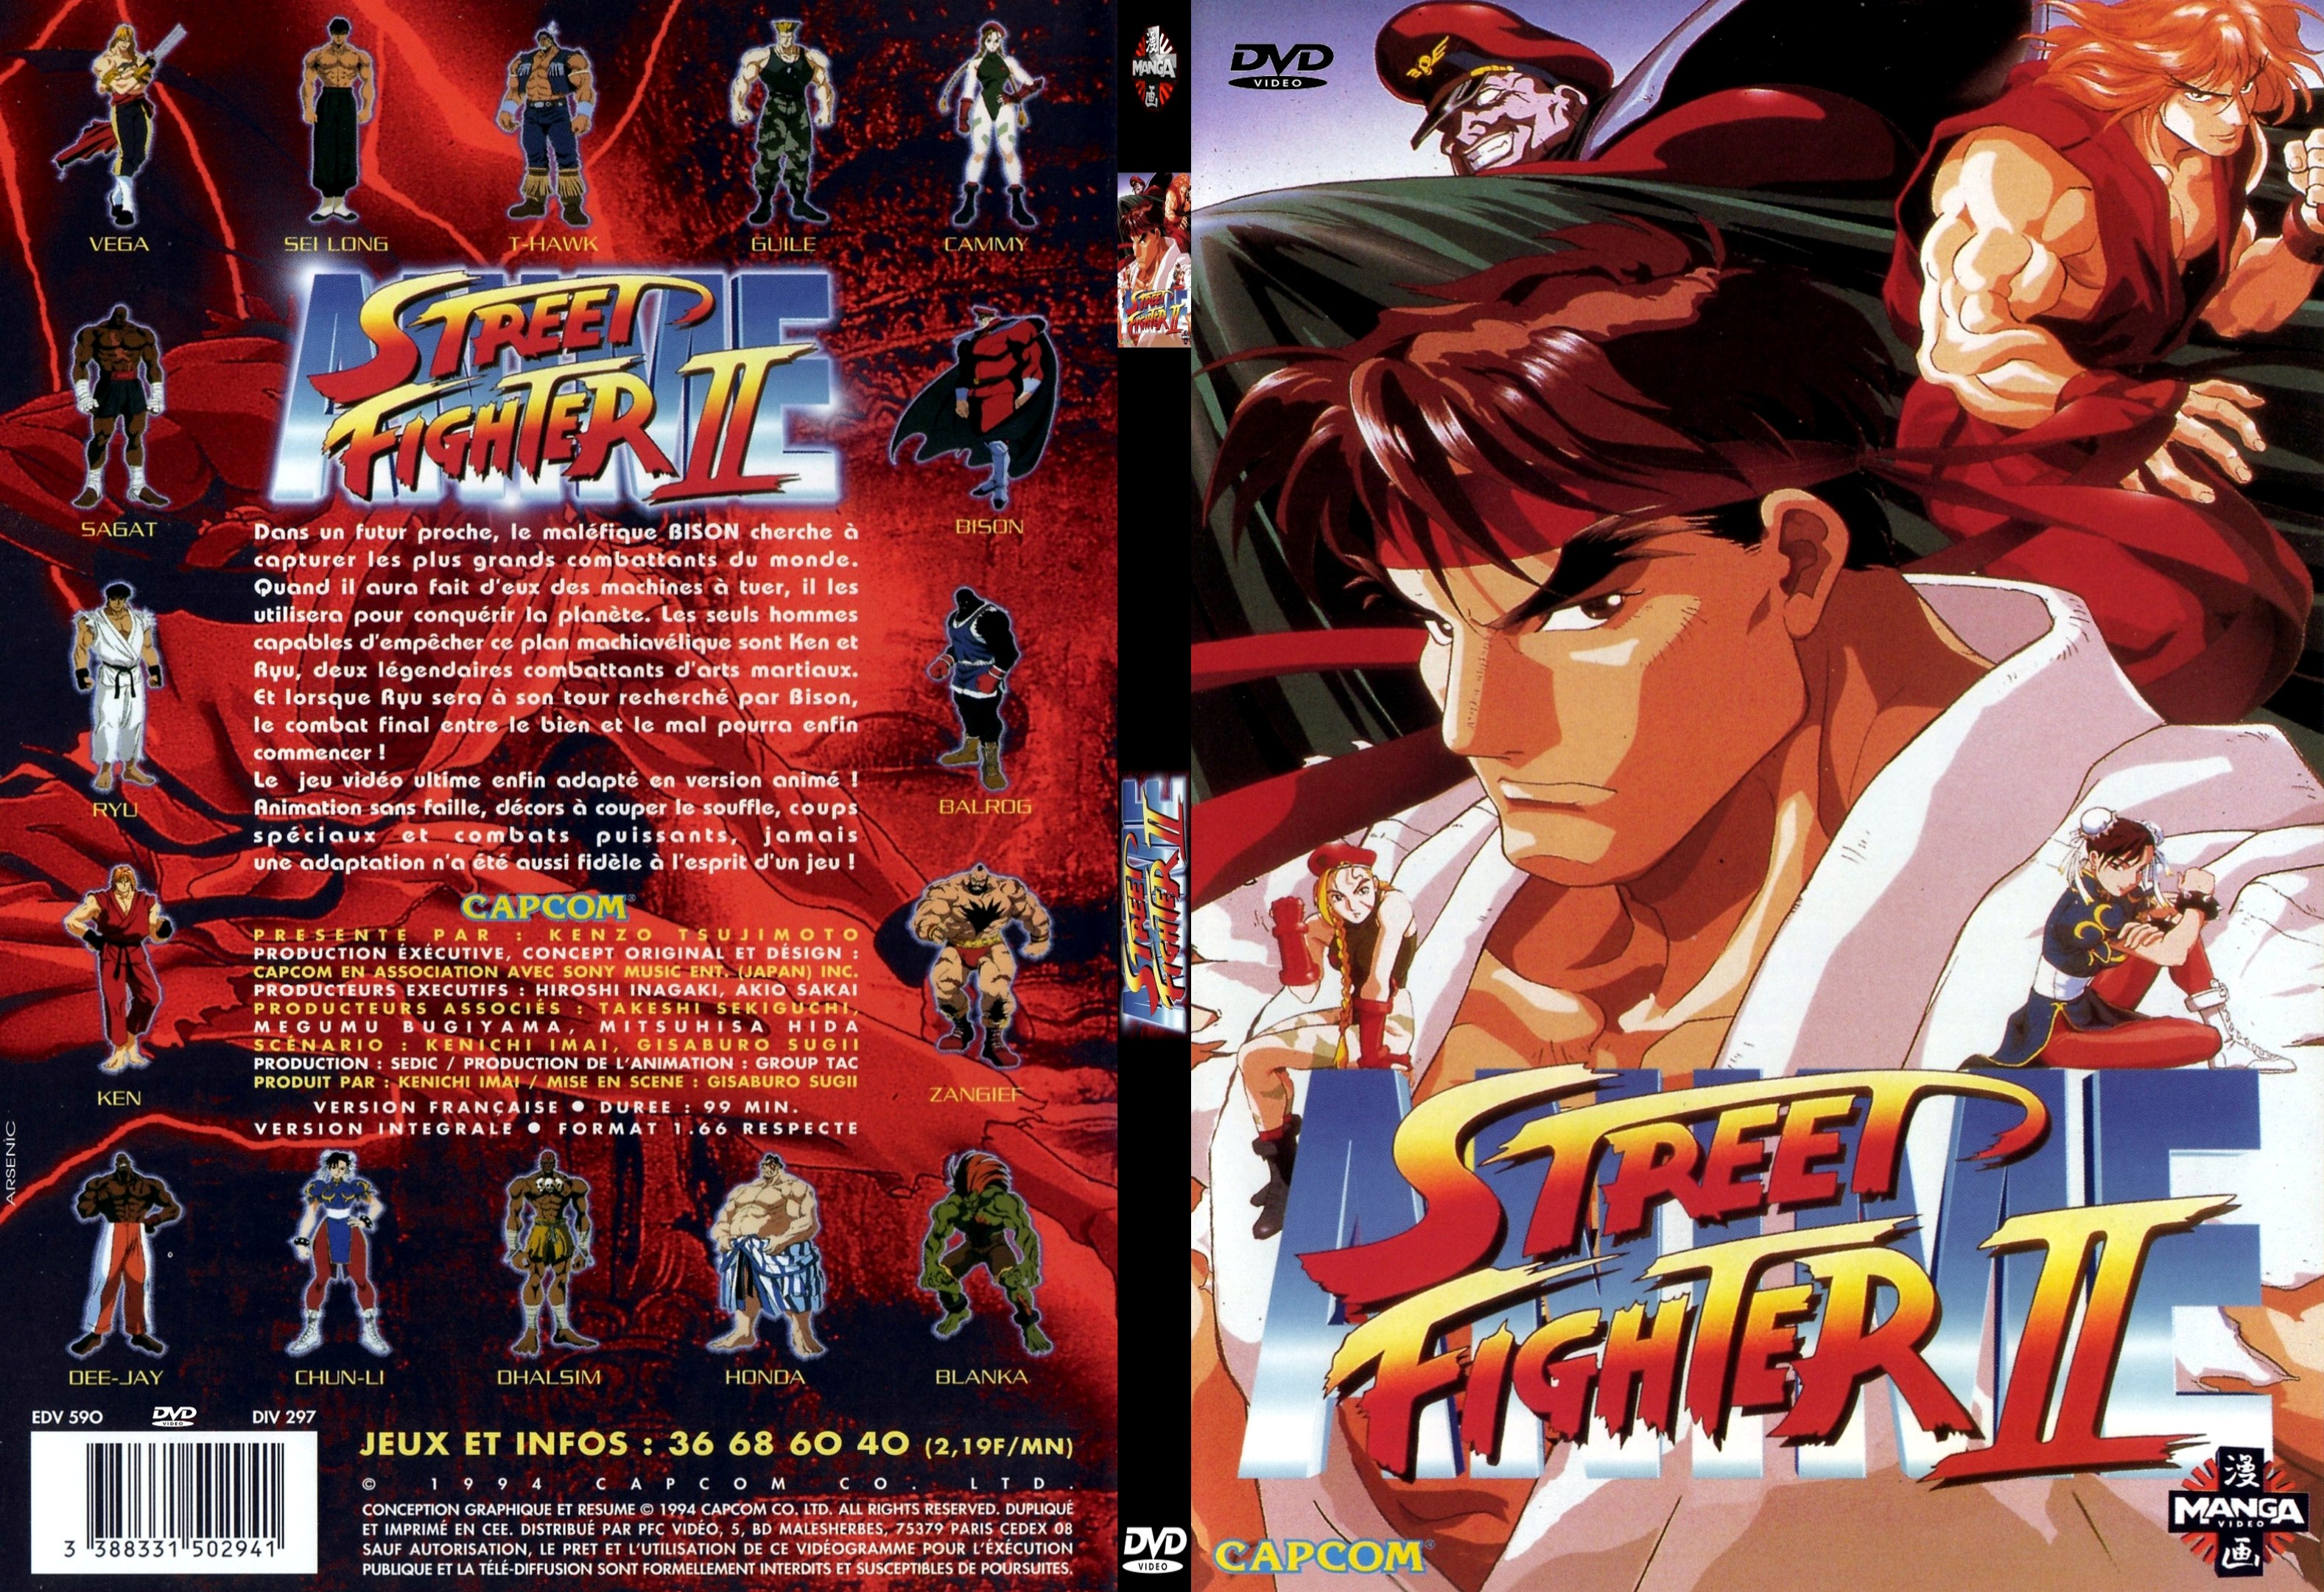 Jaquette DVD Street fighter 2 anim - SLIM